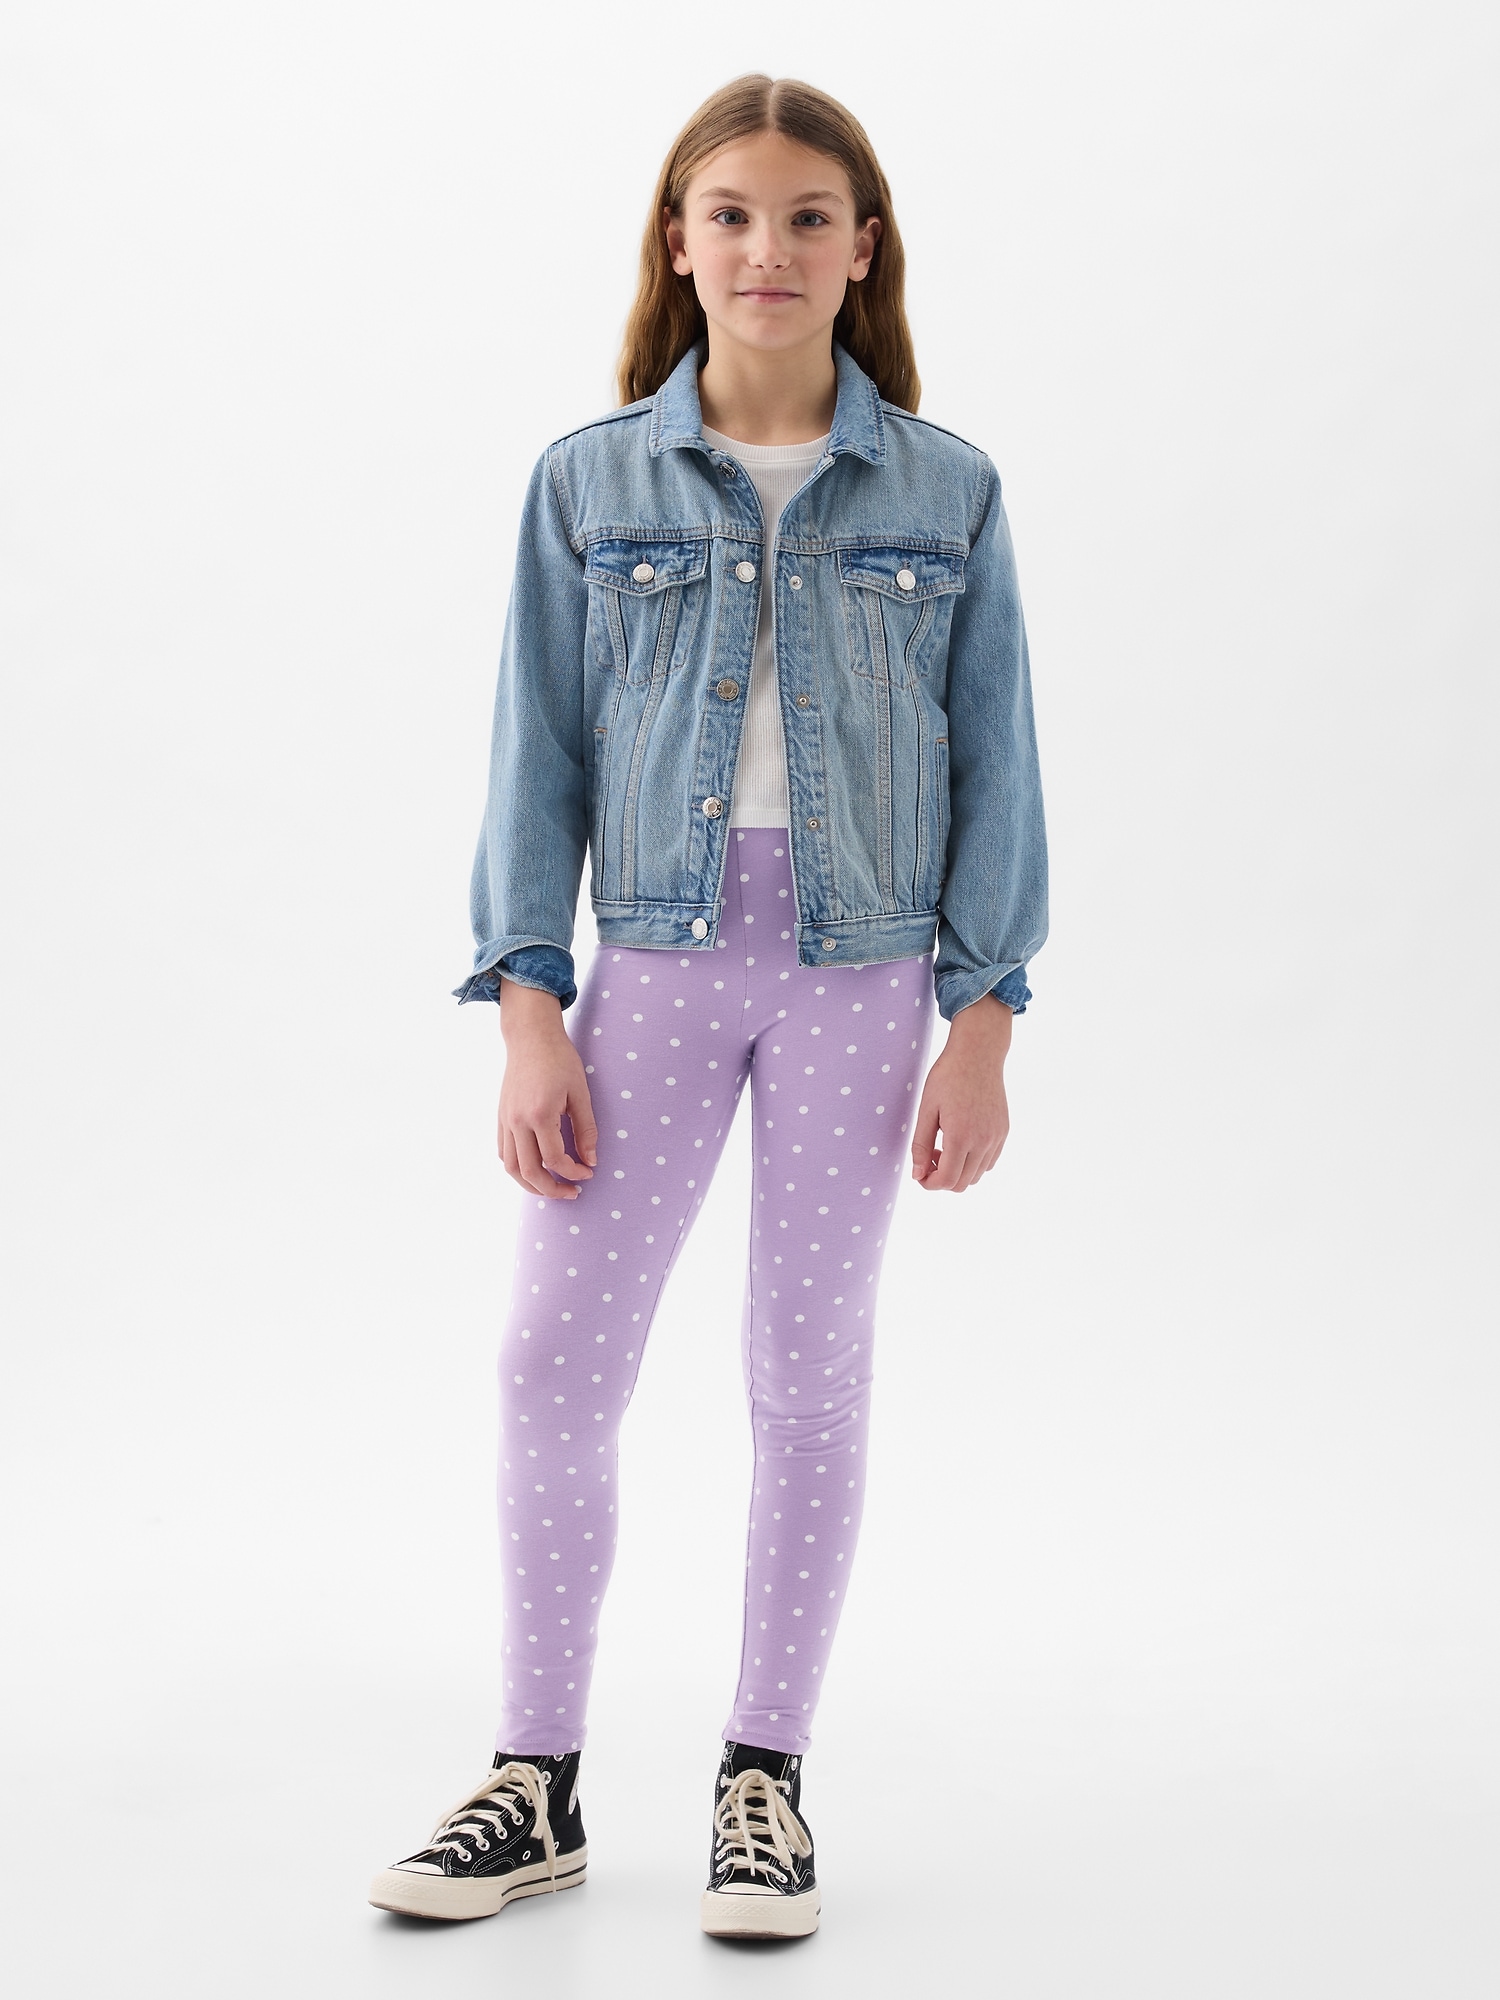 Girls Kids Premium Quality 100% Cotton Full Length Sport Fashion Leggings